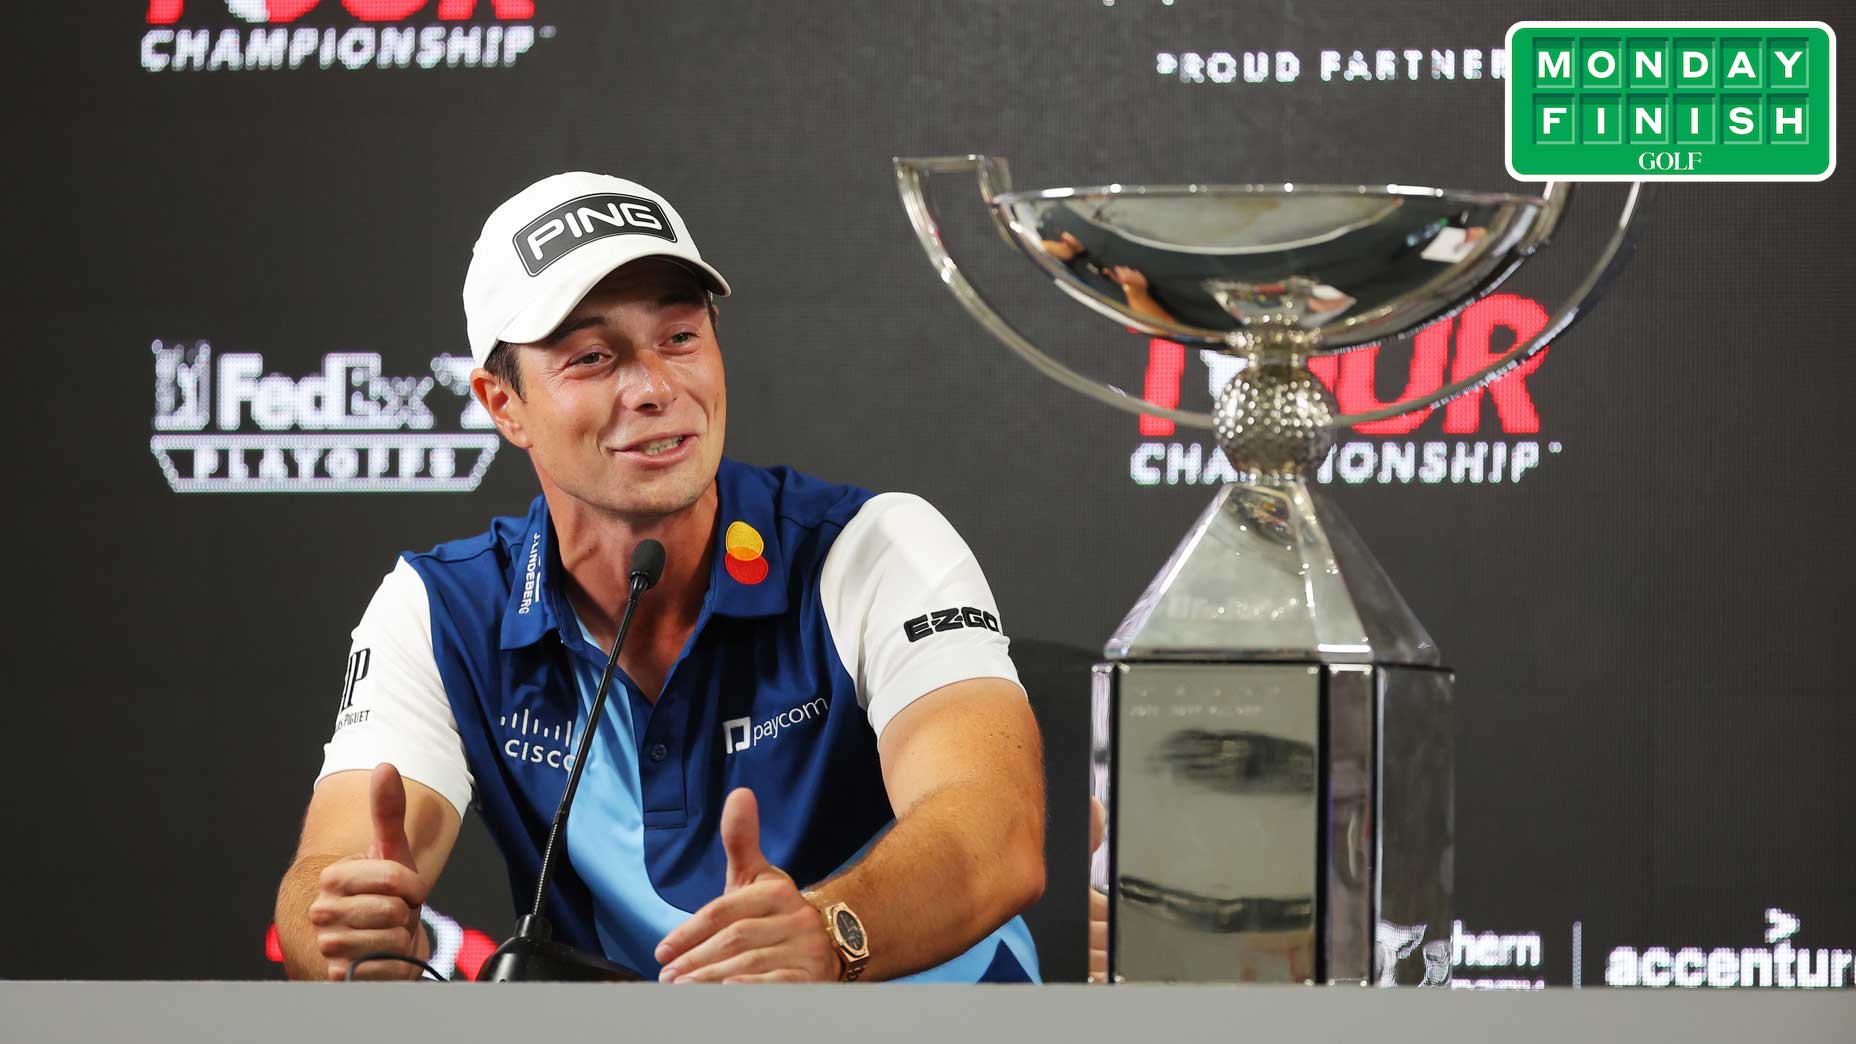 PGA Championship purse up to $17.5 million